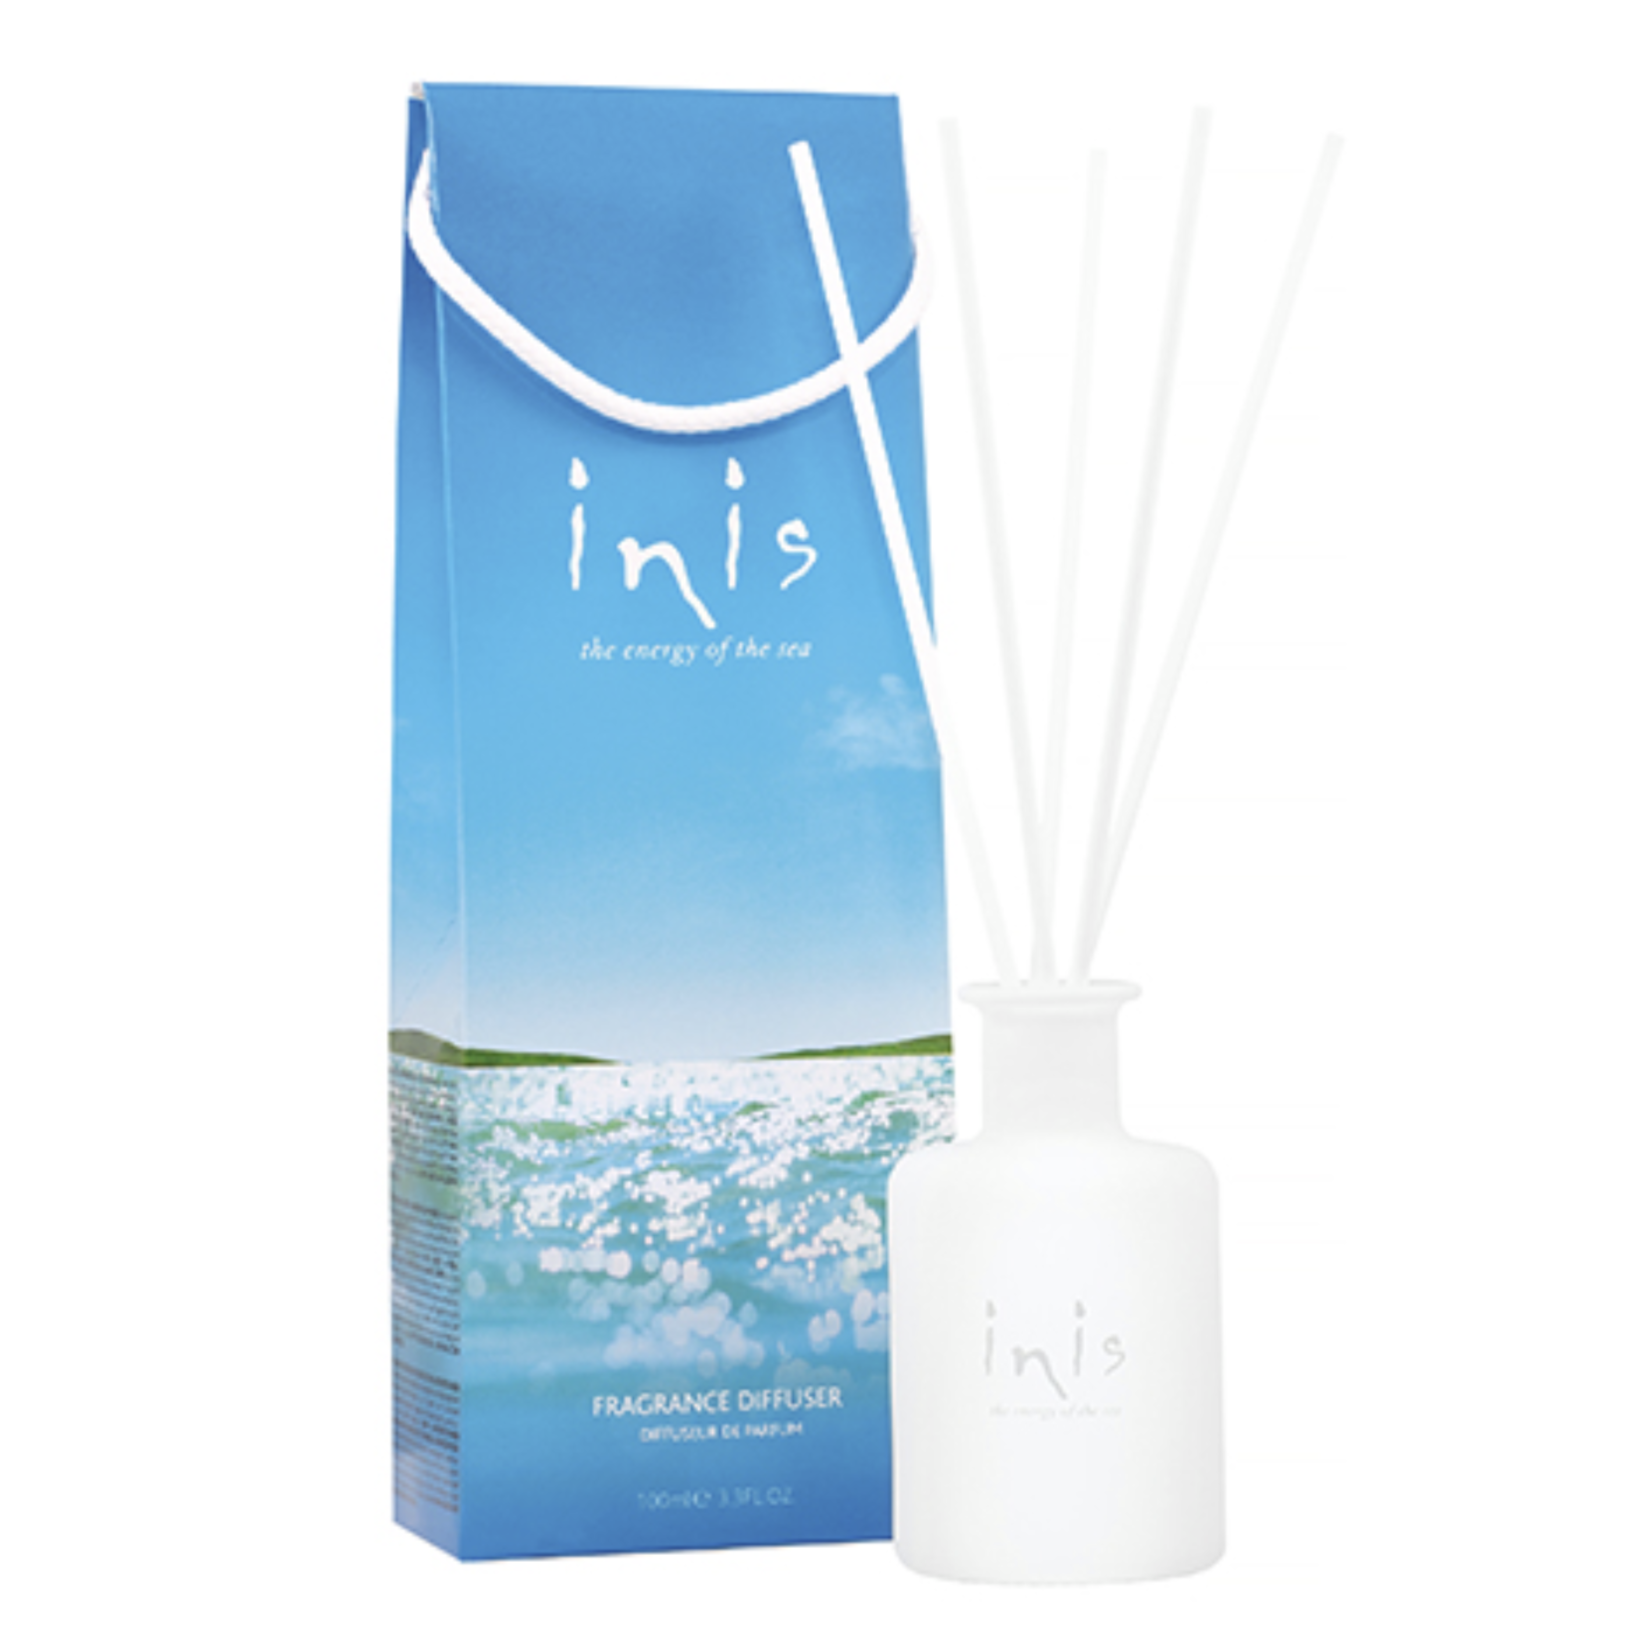 Fragrances of Ireland Ltd. Inis Energy of the Sea Diffuser